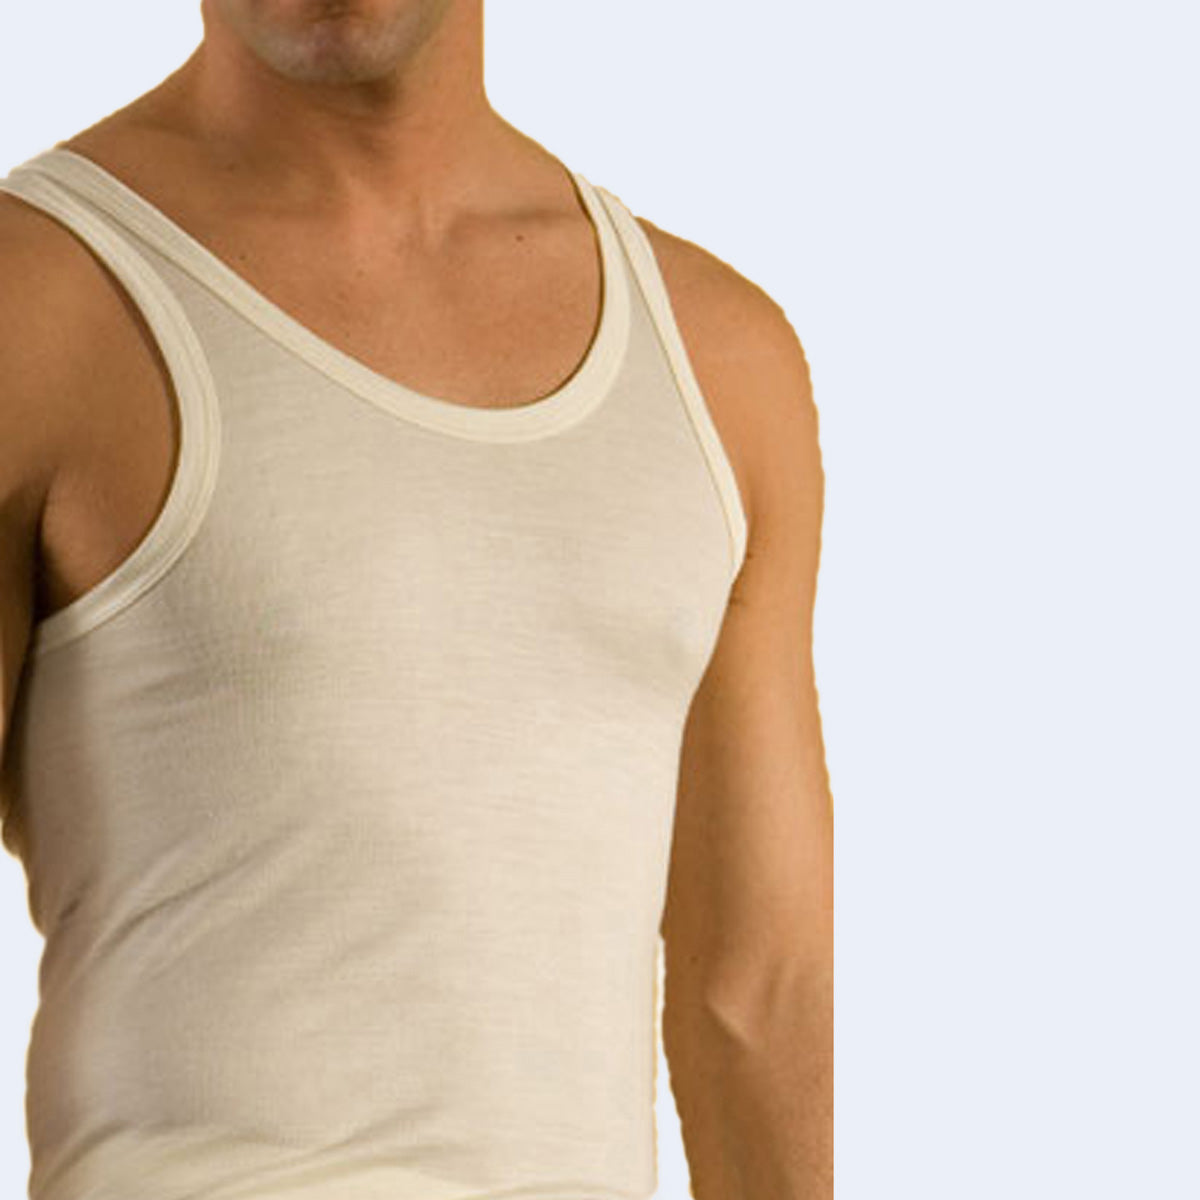 Hocosa Men's Sleeveless Undershirt in Organic Wool/Silk